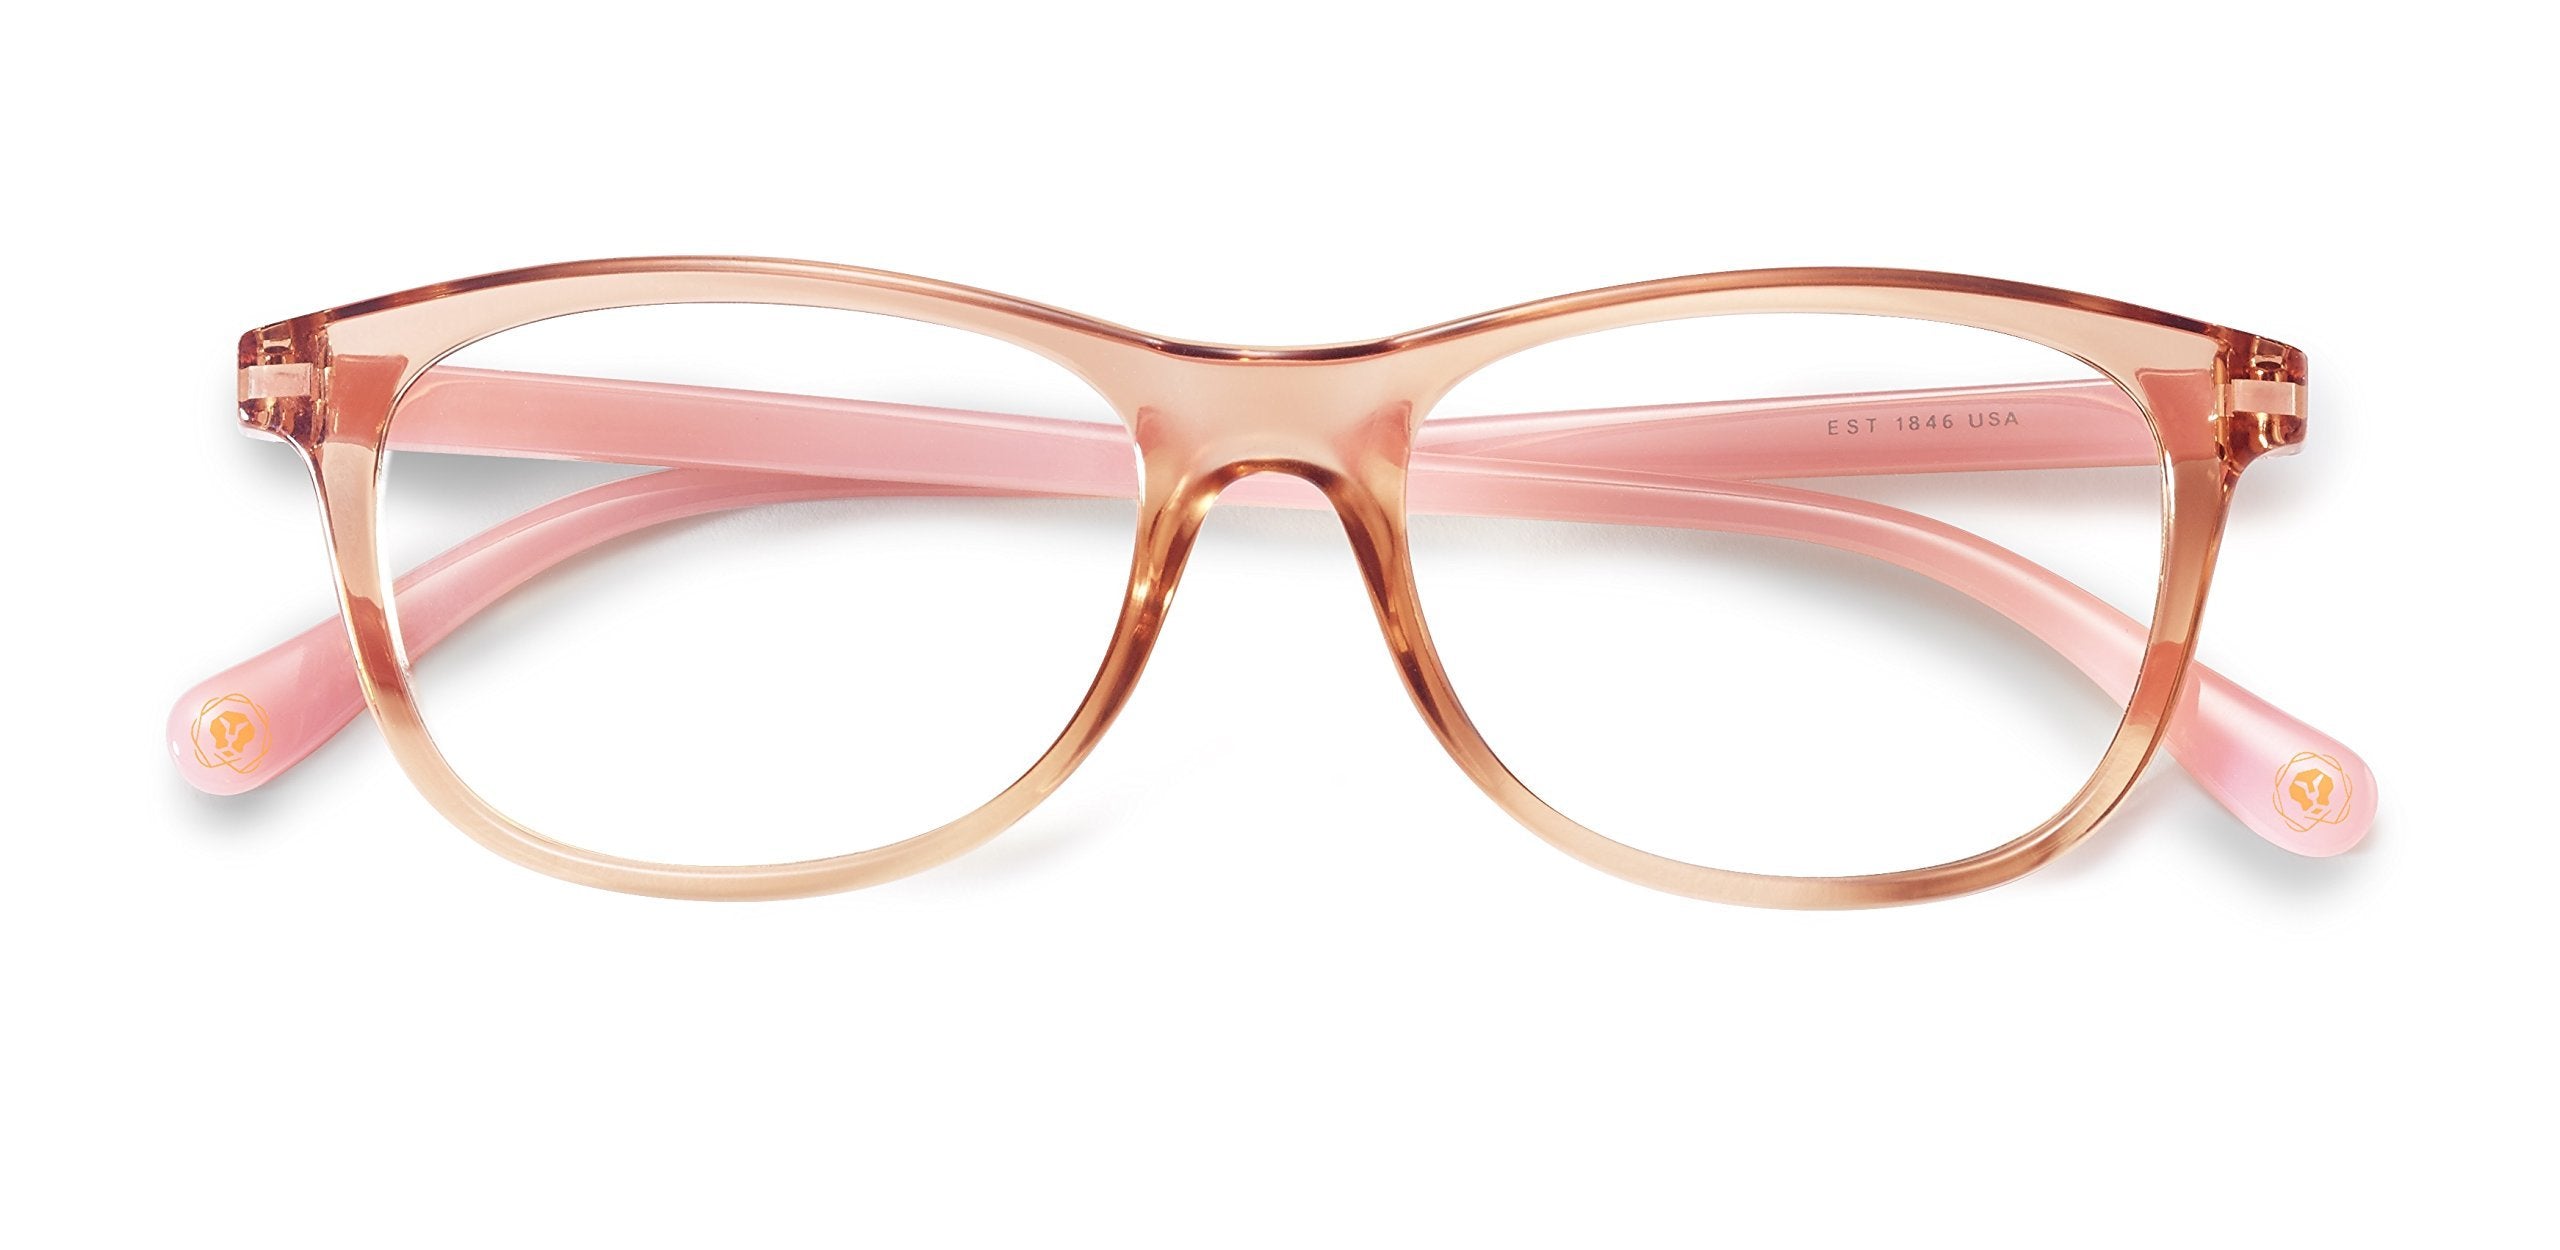 Cross Berkeley Reading Glasses, Ultra-Light Polycarbonate Readers for Women, 1.00 Magnification